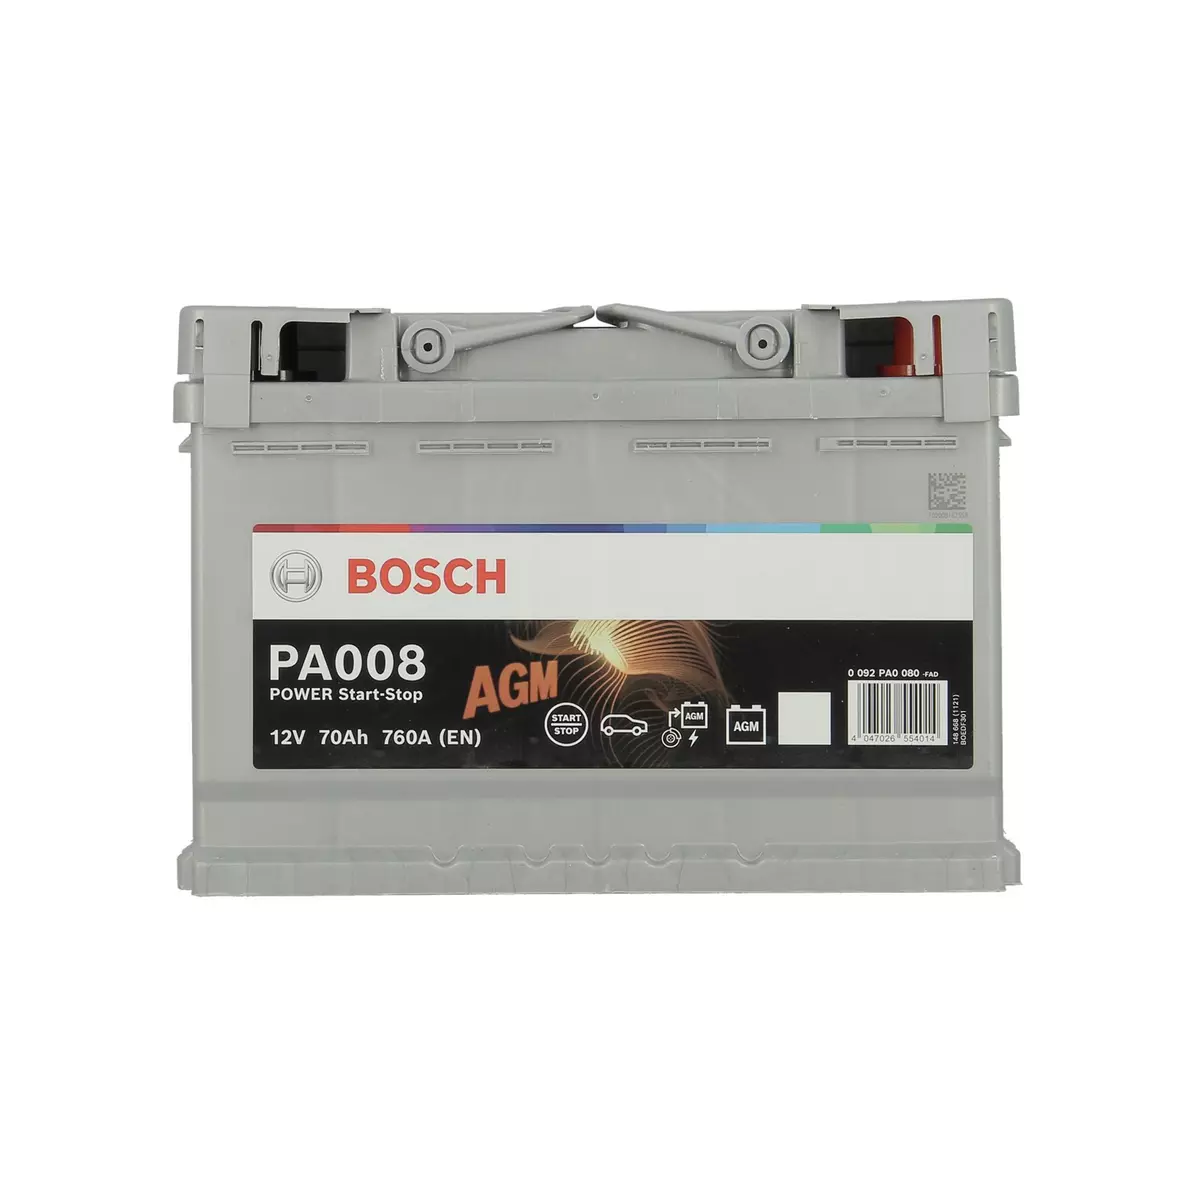 BOSCH Batterie 70Ah 760A PA008 pas cher 